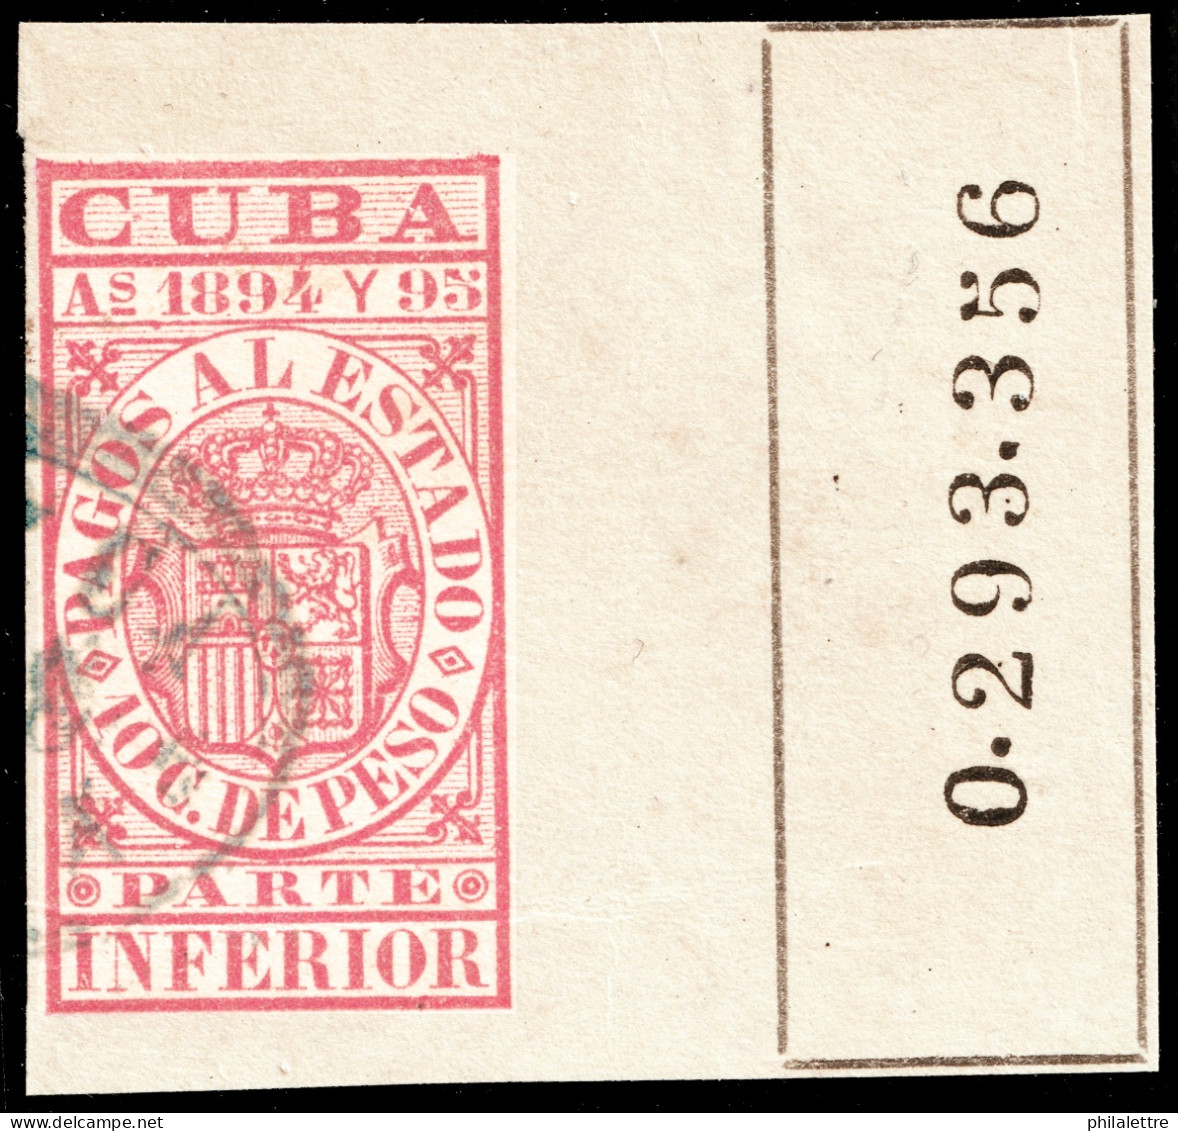 ESPAGNE / ESPANA - COLONIAS (Cuba) 1894/95 "PAGOS AL ESTADO" Fulcher 1150 10c Sello Parte Inferior Usado (0.293.356) - Kuba (1874-1898)